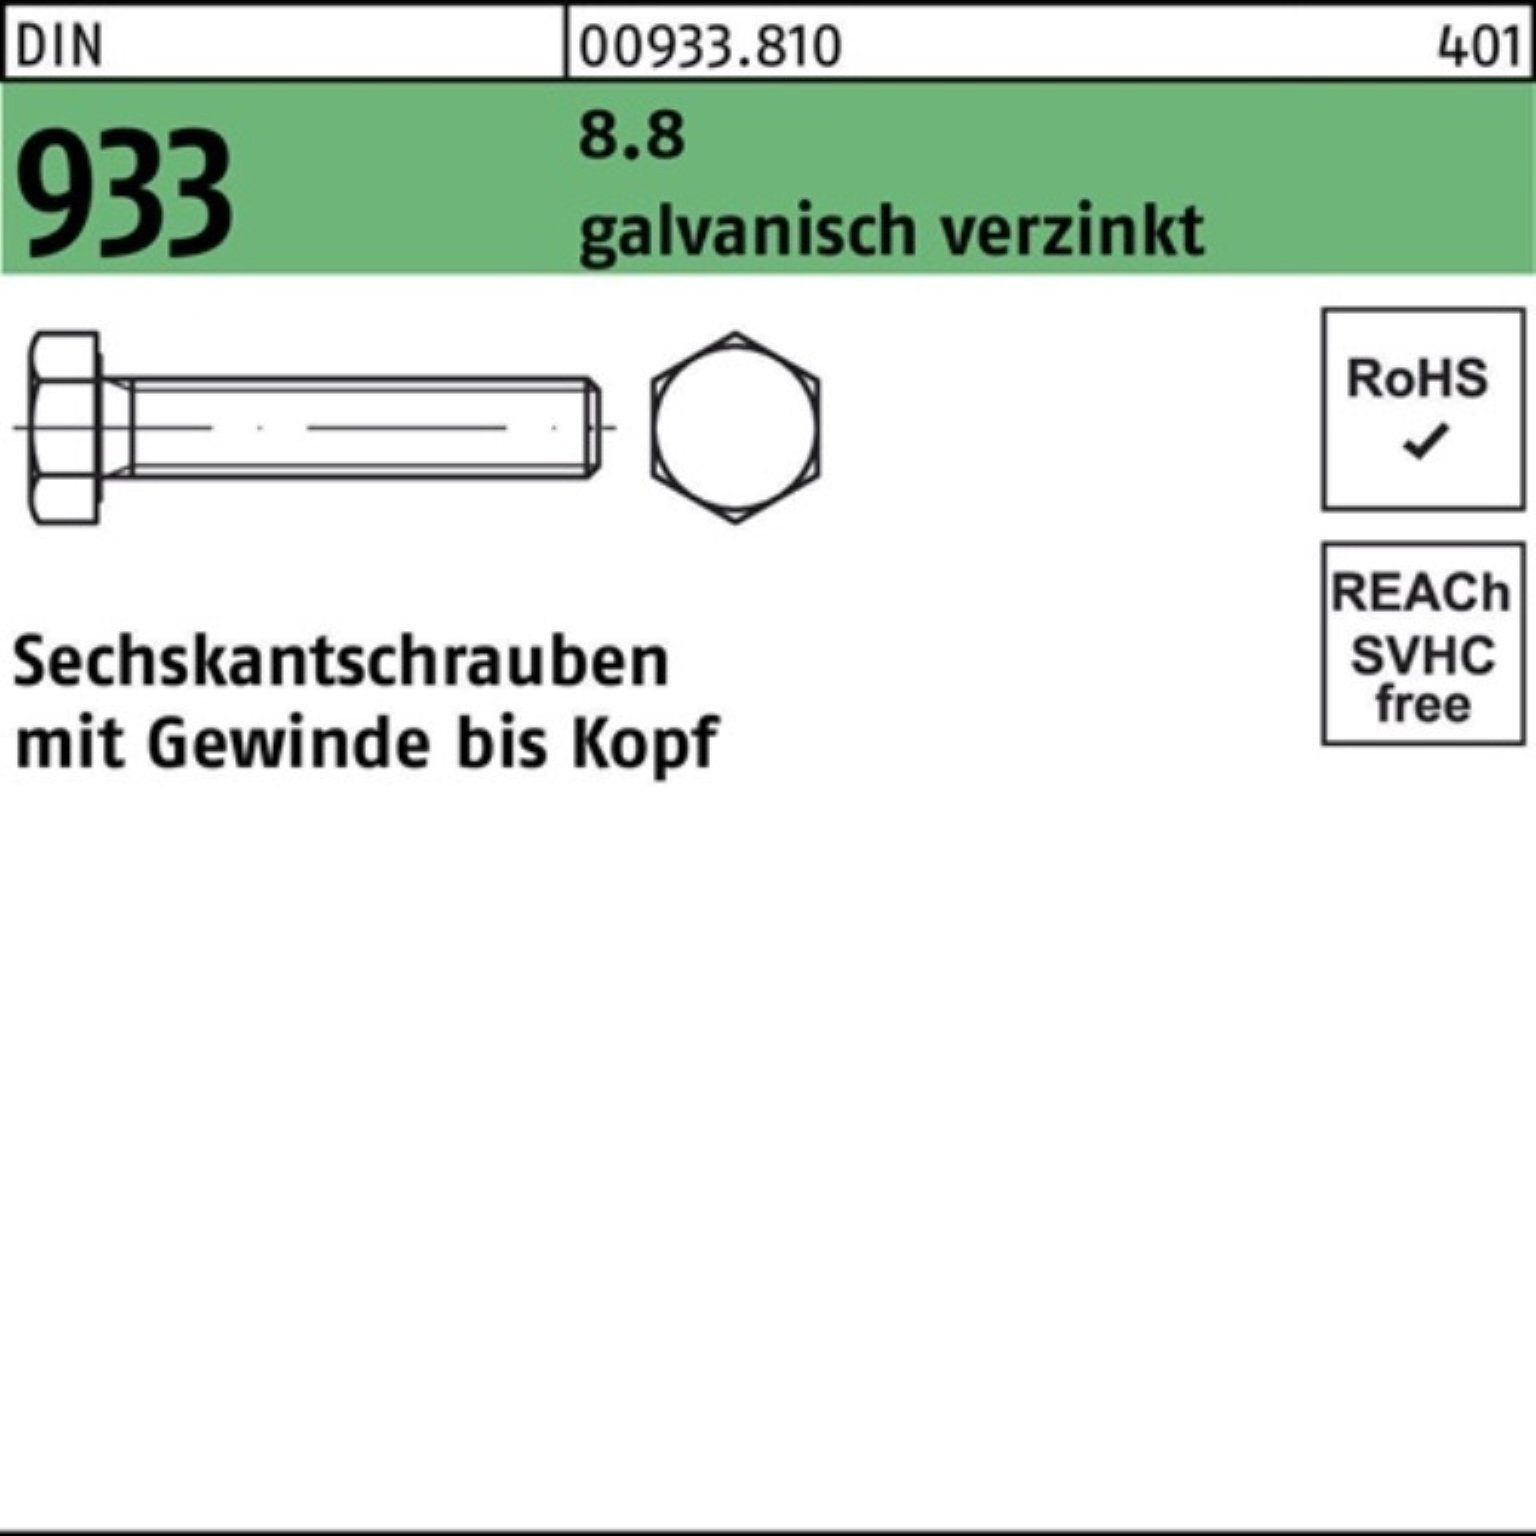 M48x Stü 8.8 Sechskantschraube 100er DIN Reyher Sechskantschraube 933 1 150 galv.verz. Pack VG